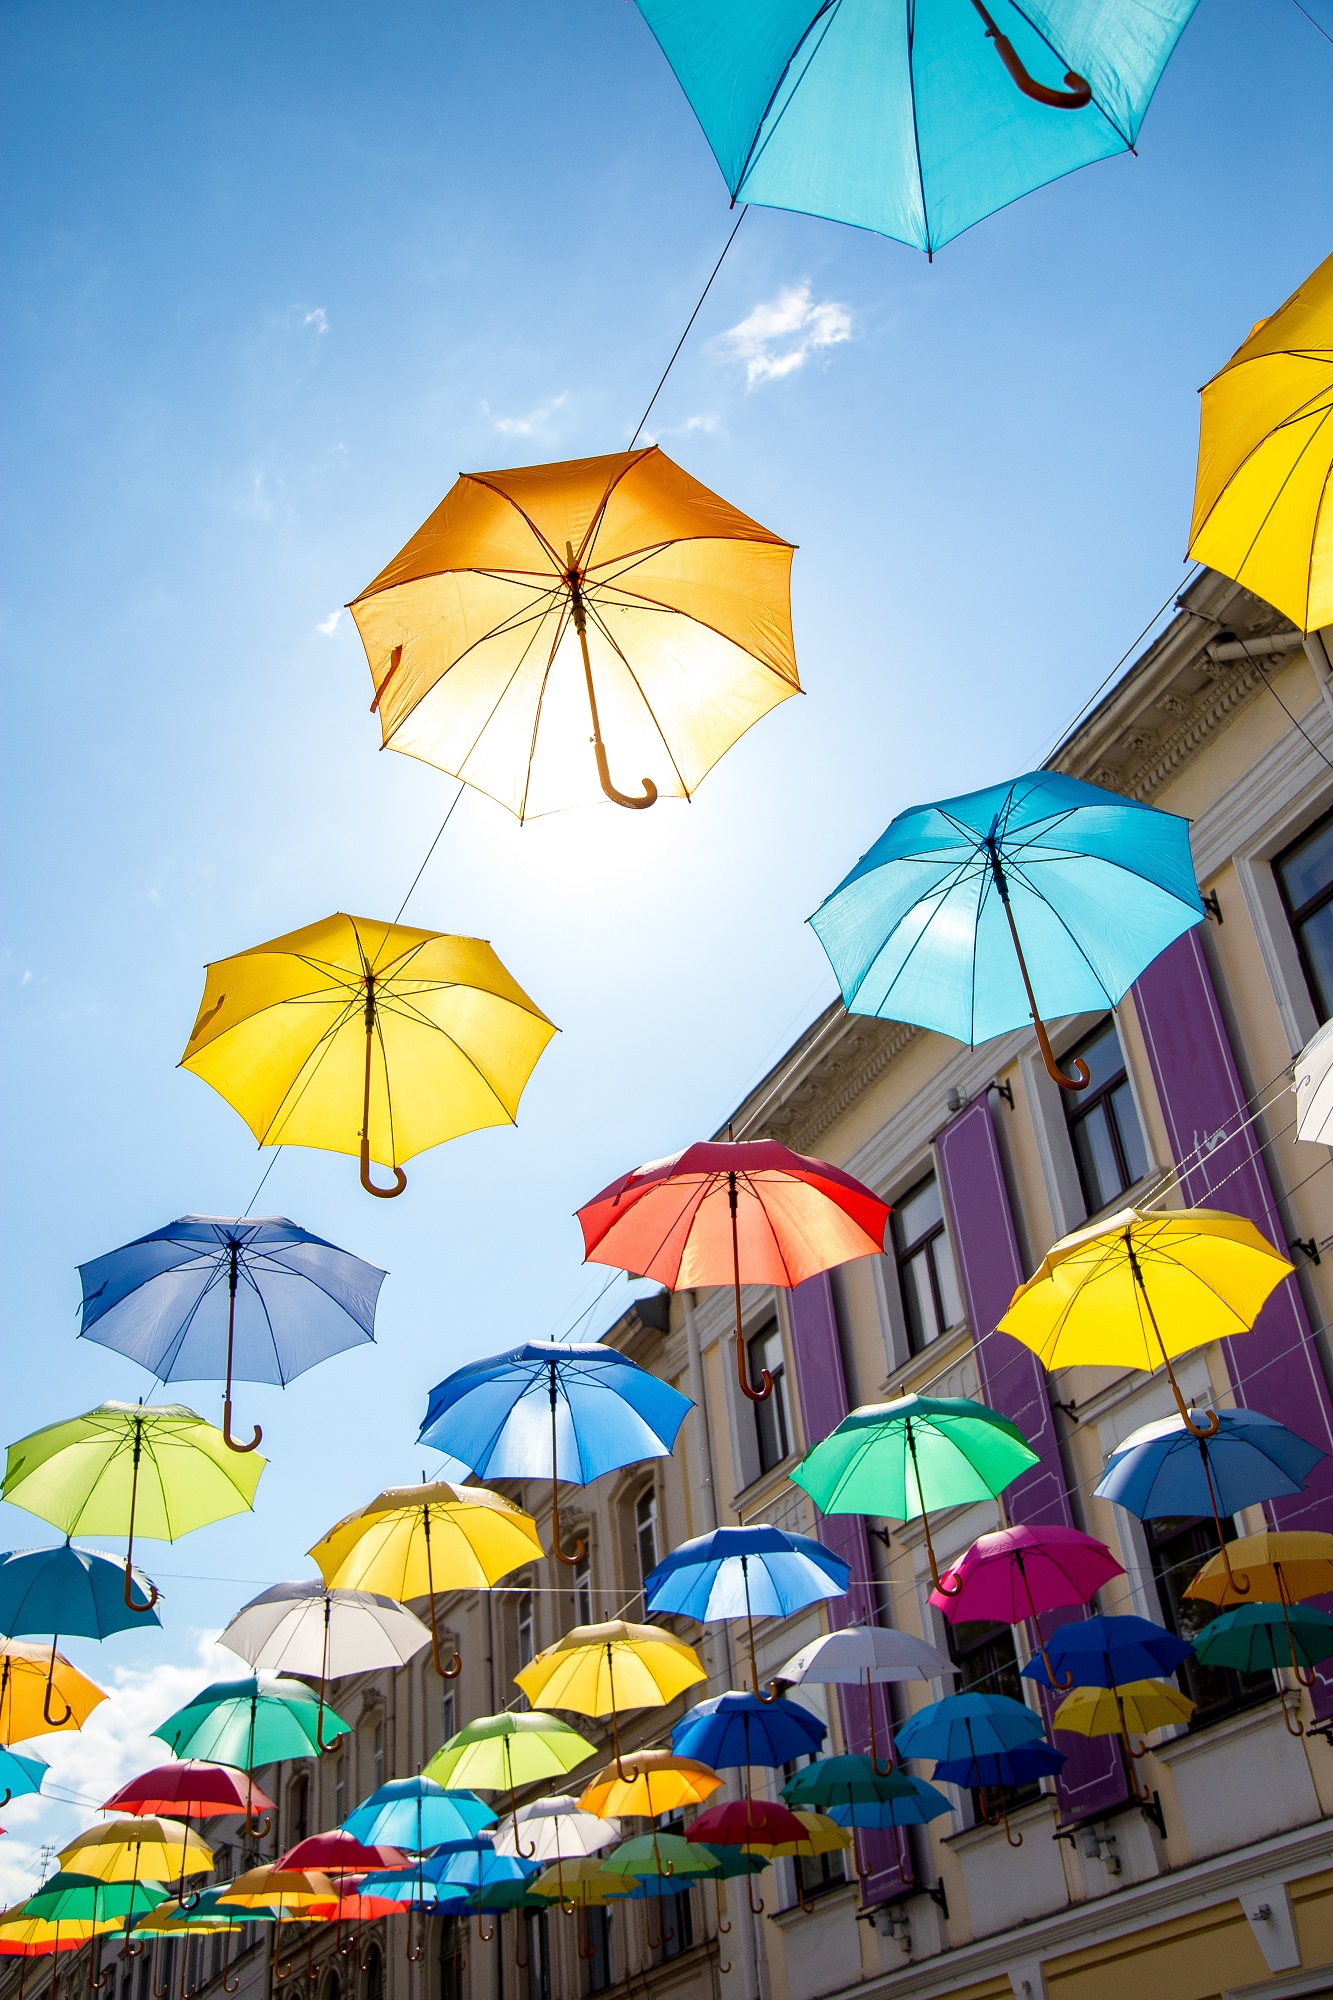 colorful-umbrellas-over-the-street-public-art